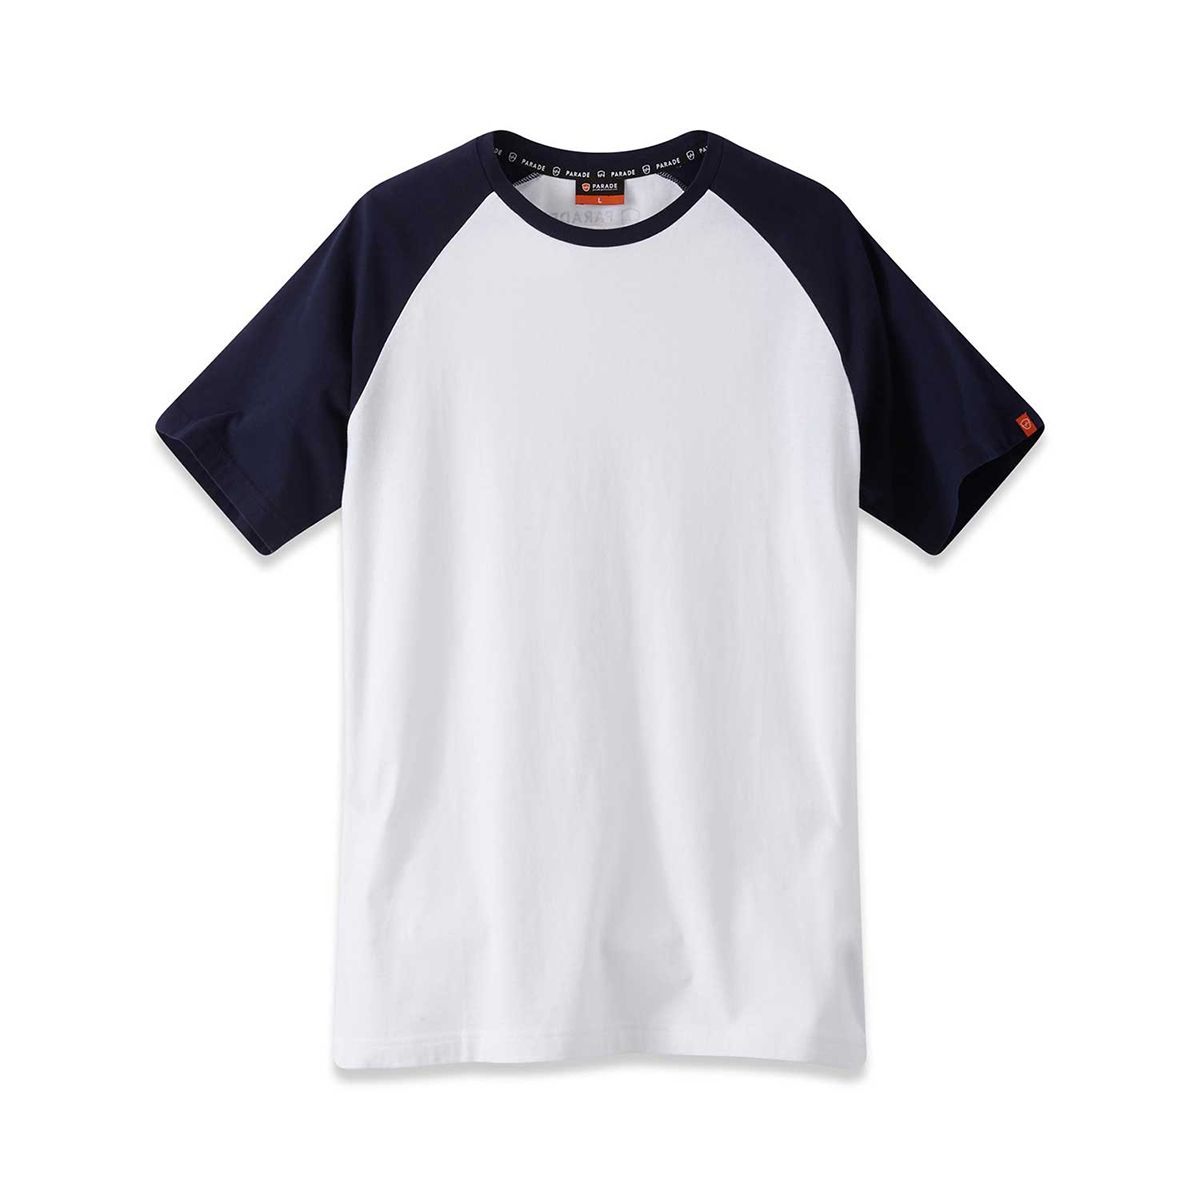 Parade White Cotton Short Sleeve T-Shirt, UK- XXXL, EUR- XXXL